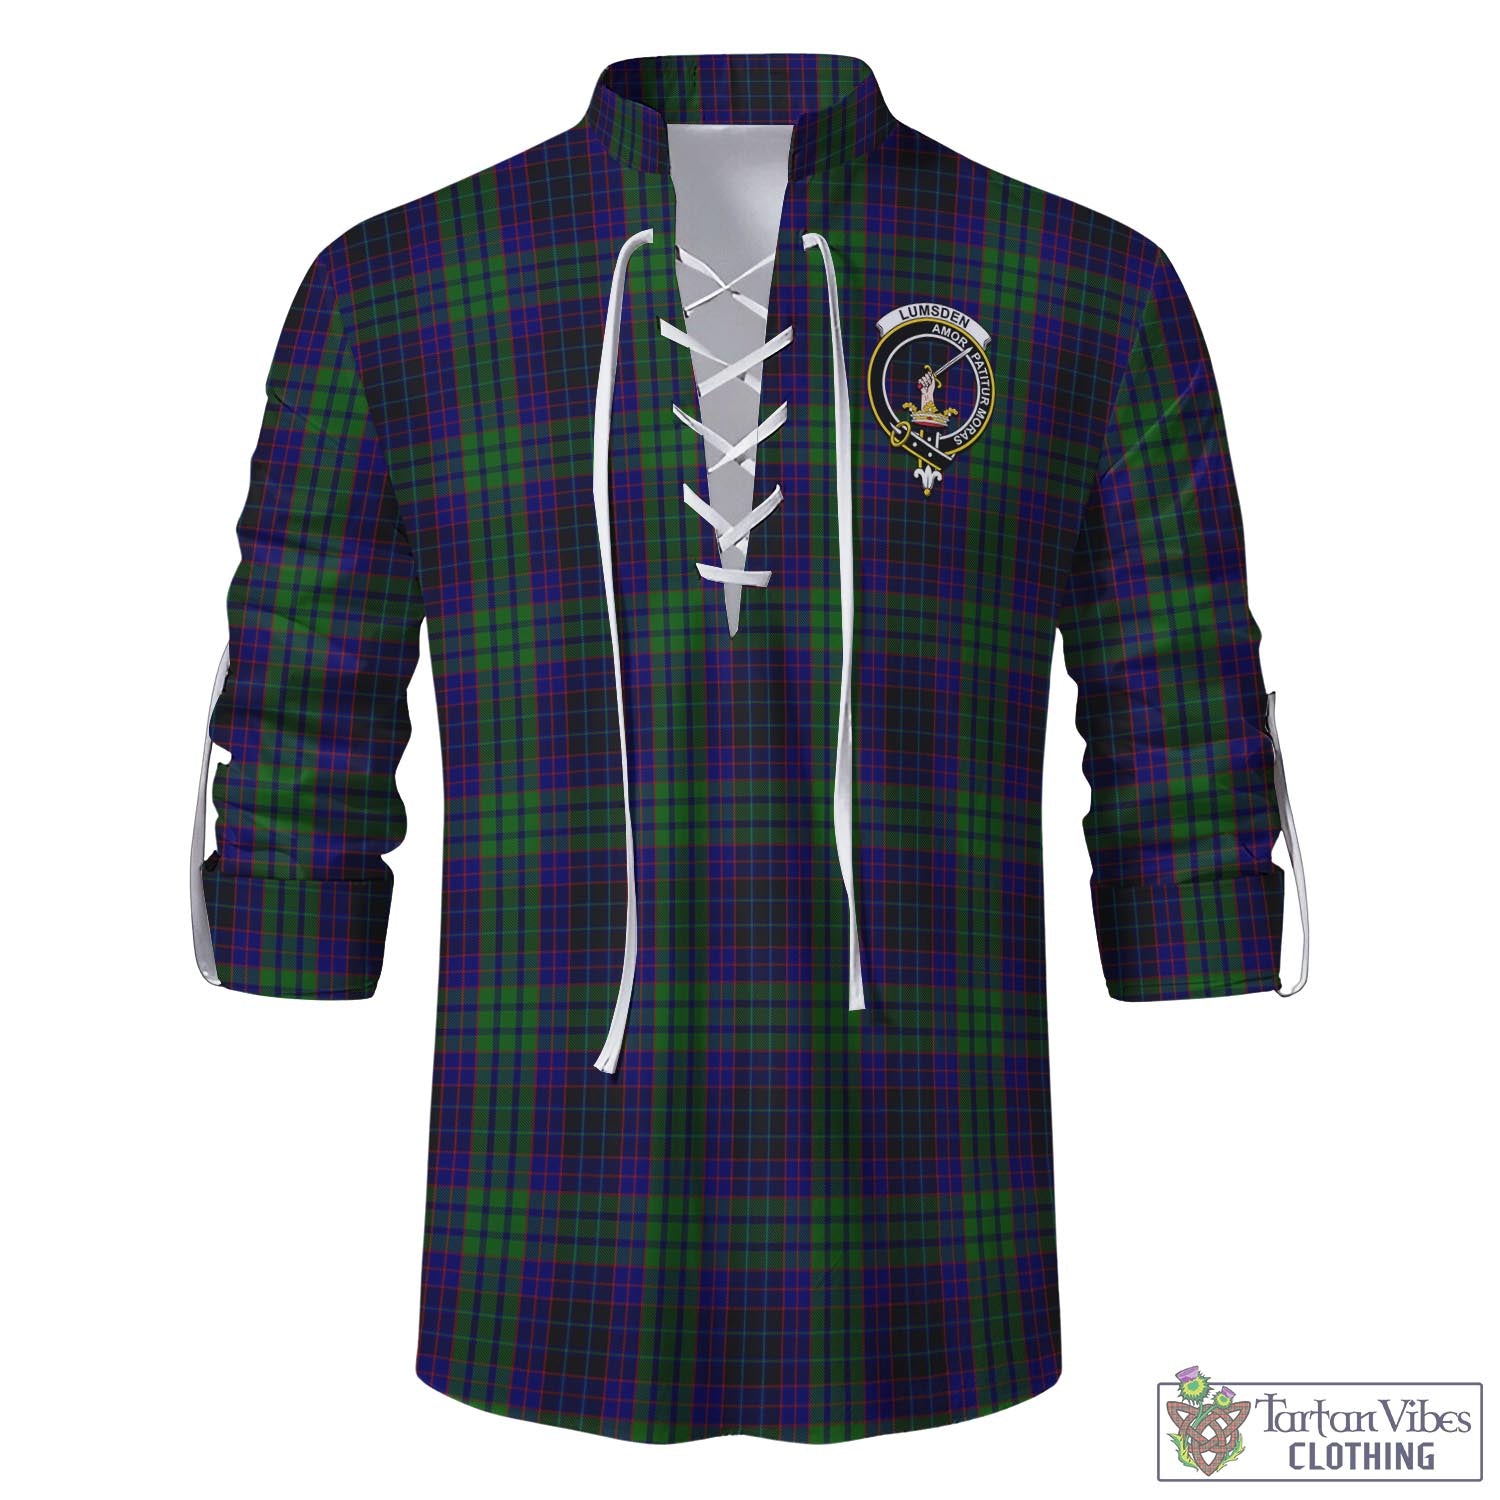 Tartan Vibes Clothing Lumsden Green Tartan Men's Scottish Traditional Jacobite Ghillie Kilt Shirt with Family Crest